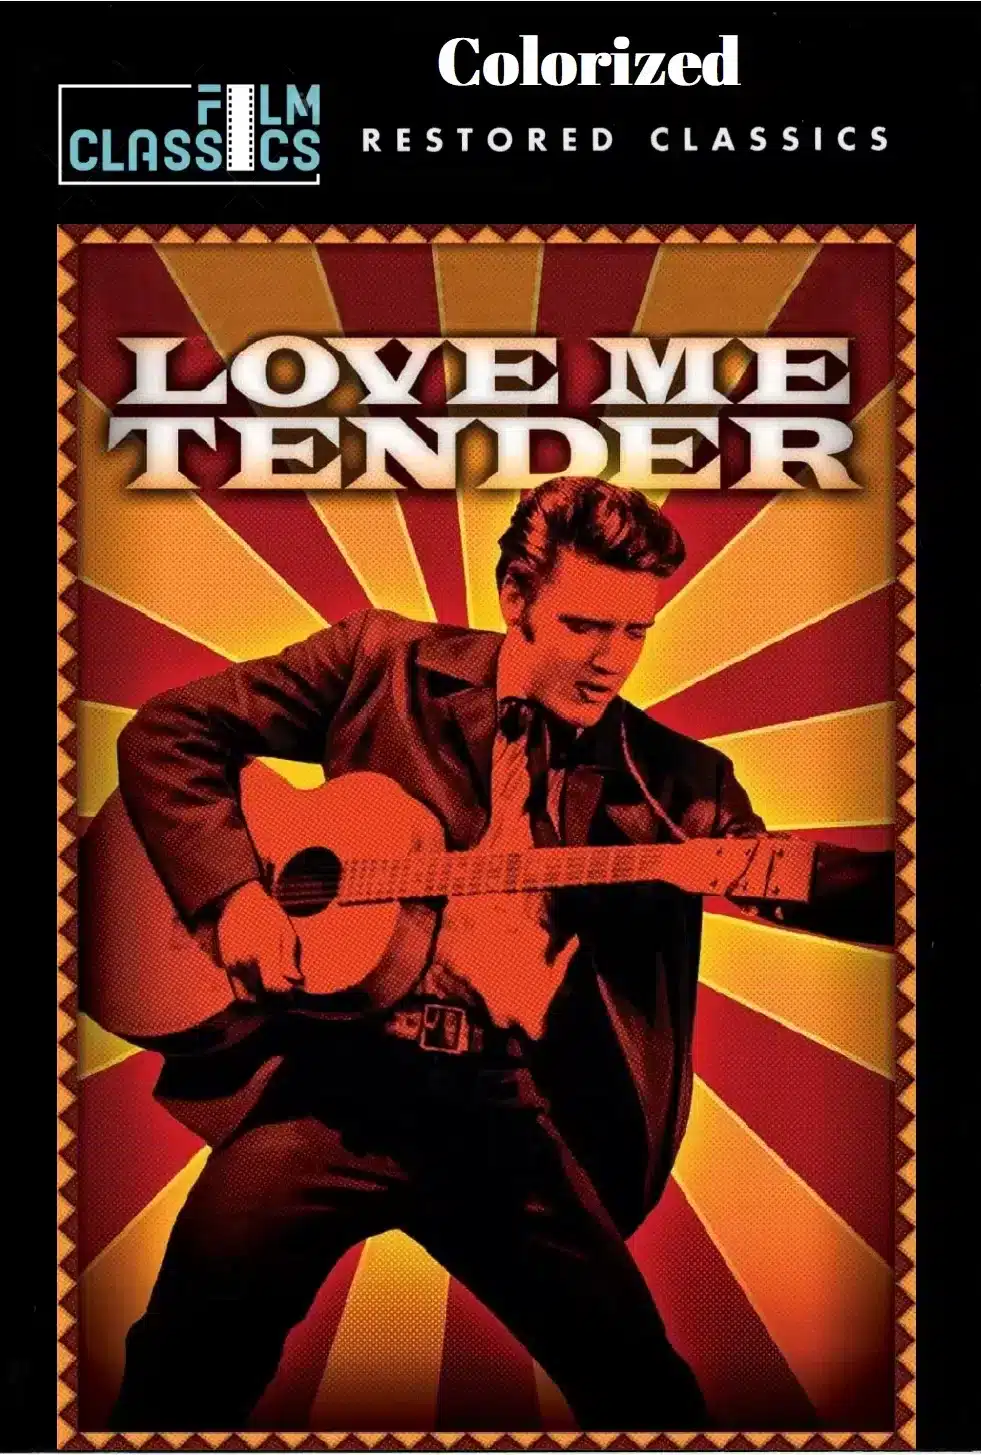 Love　Colorized　Film　Elvis　Version　Me　DVD　Classics　Tender　Presley